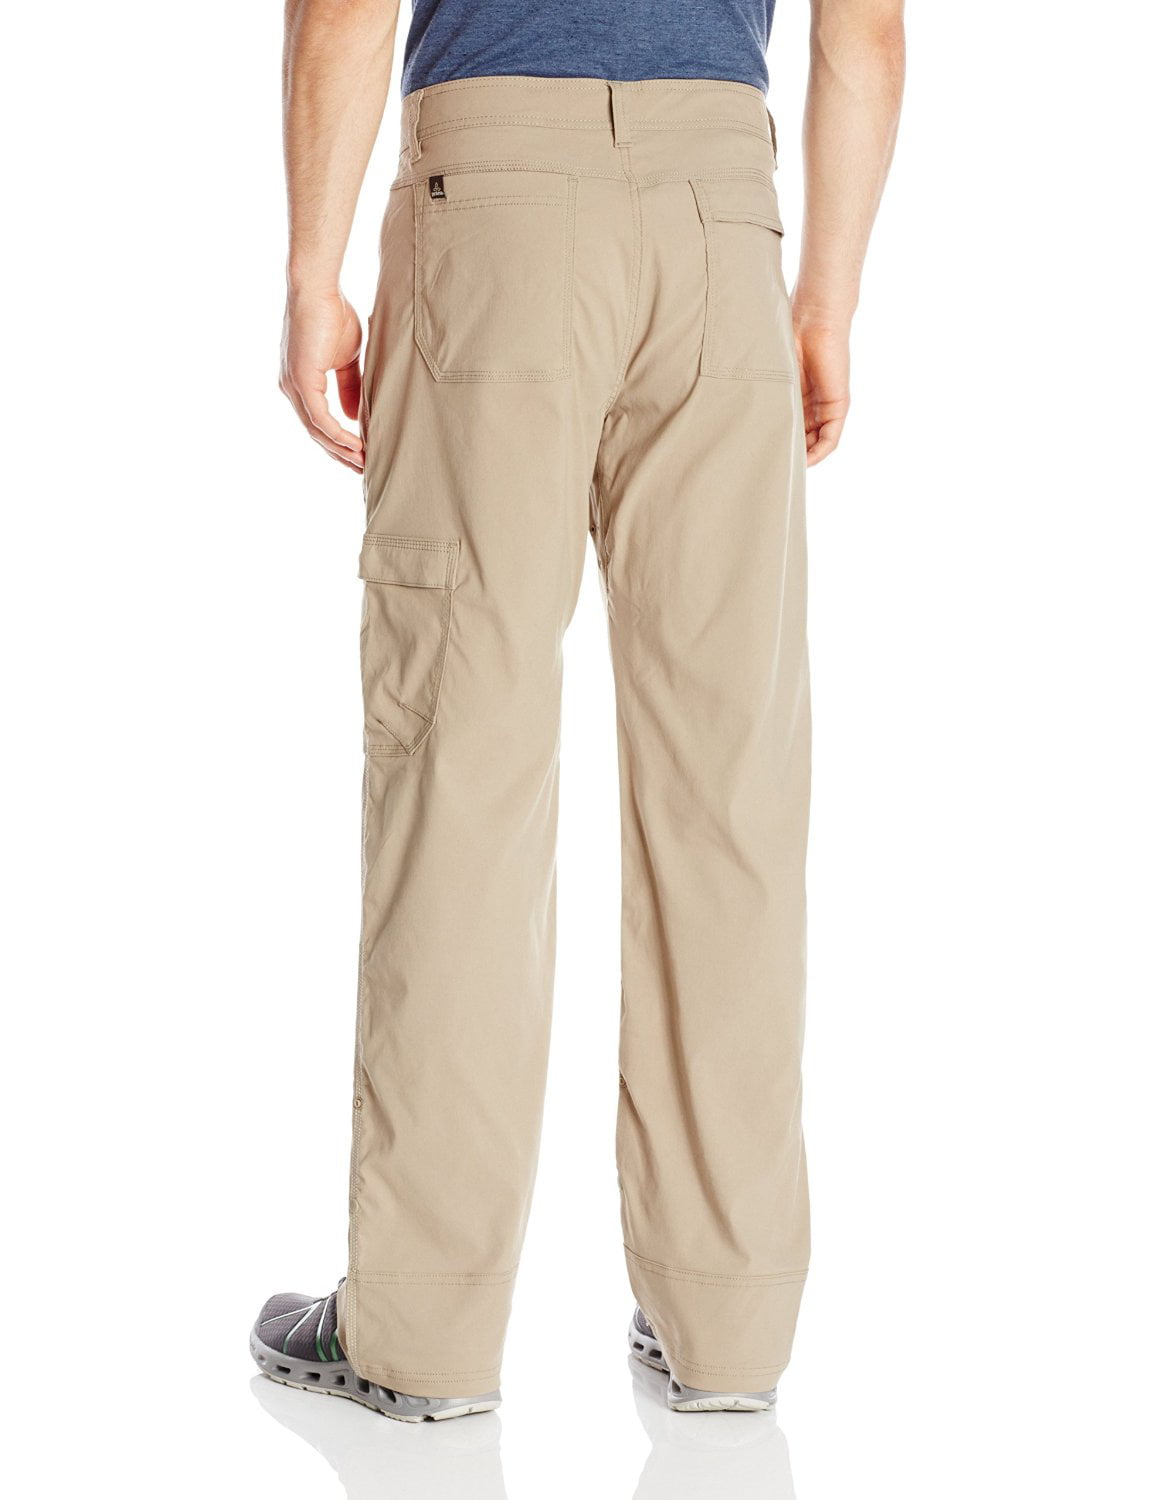 prAna - prana men's stretch zion pants - Walmart.com - Walmart.com